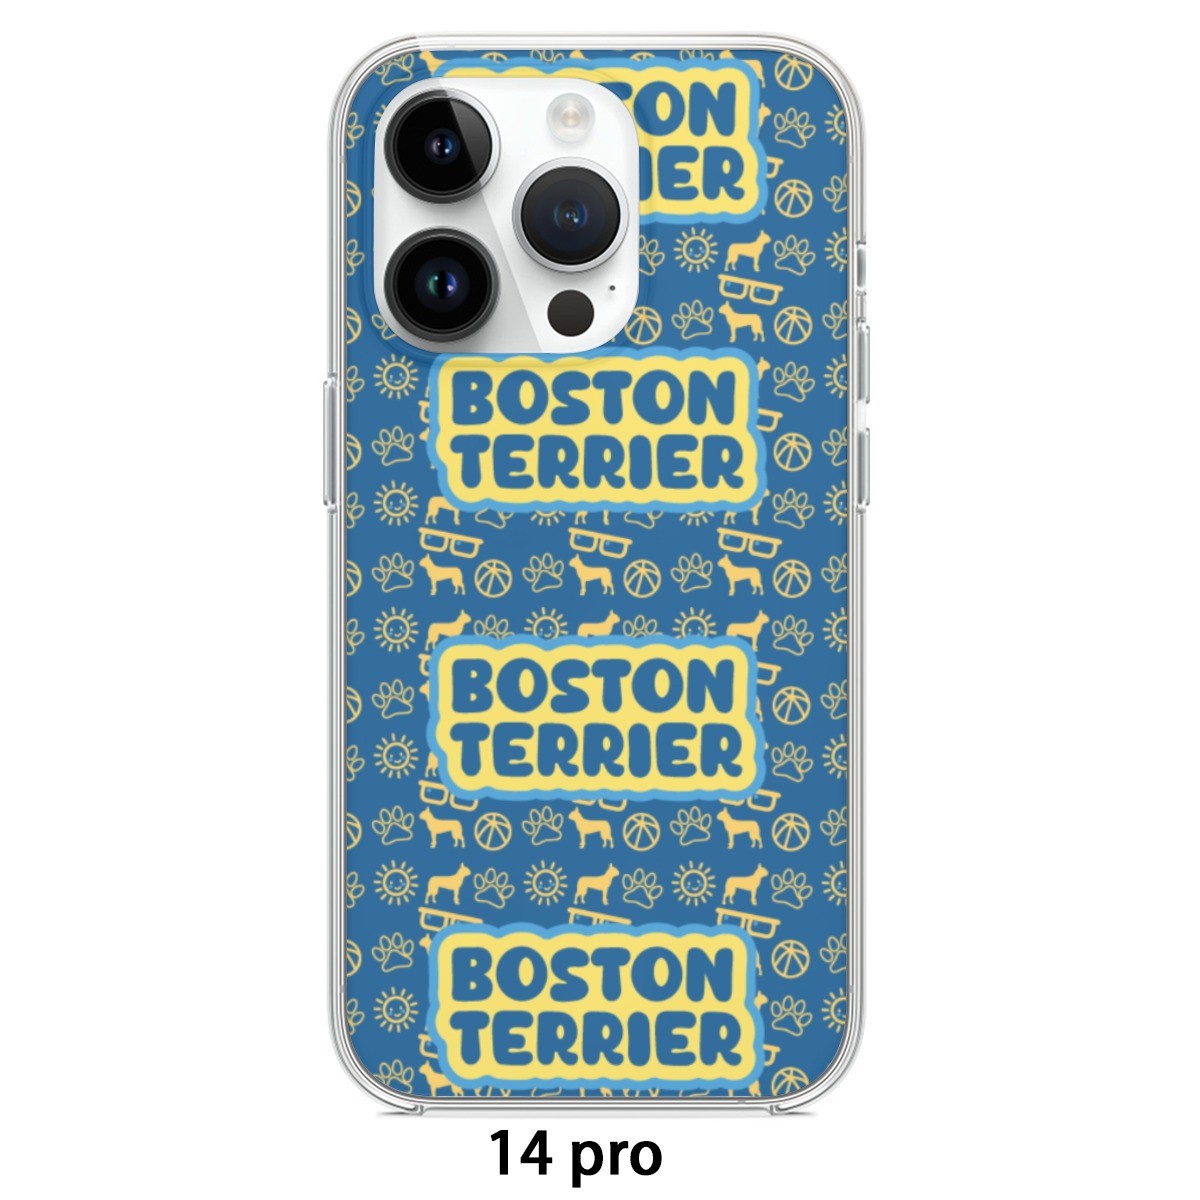 Charlotte - iPhone case for Boston Terrier lovers